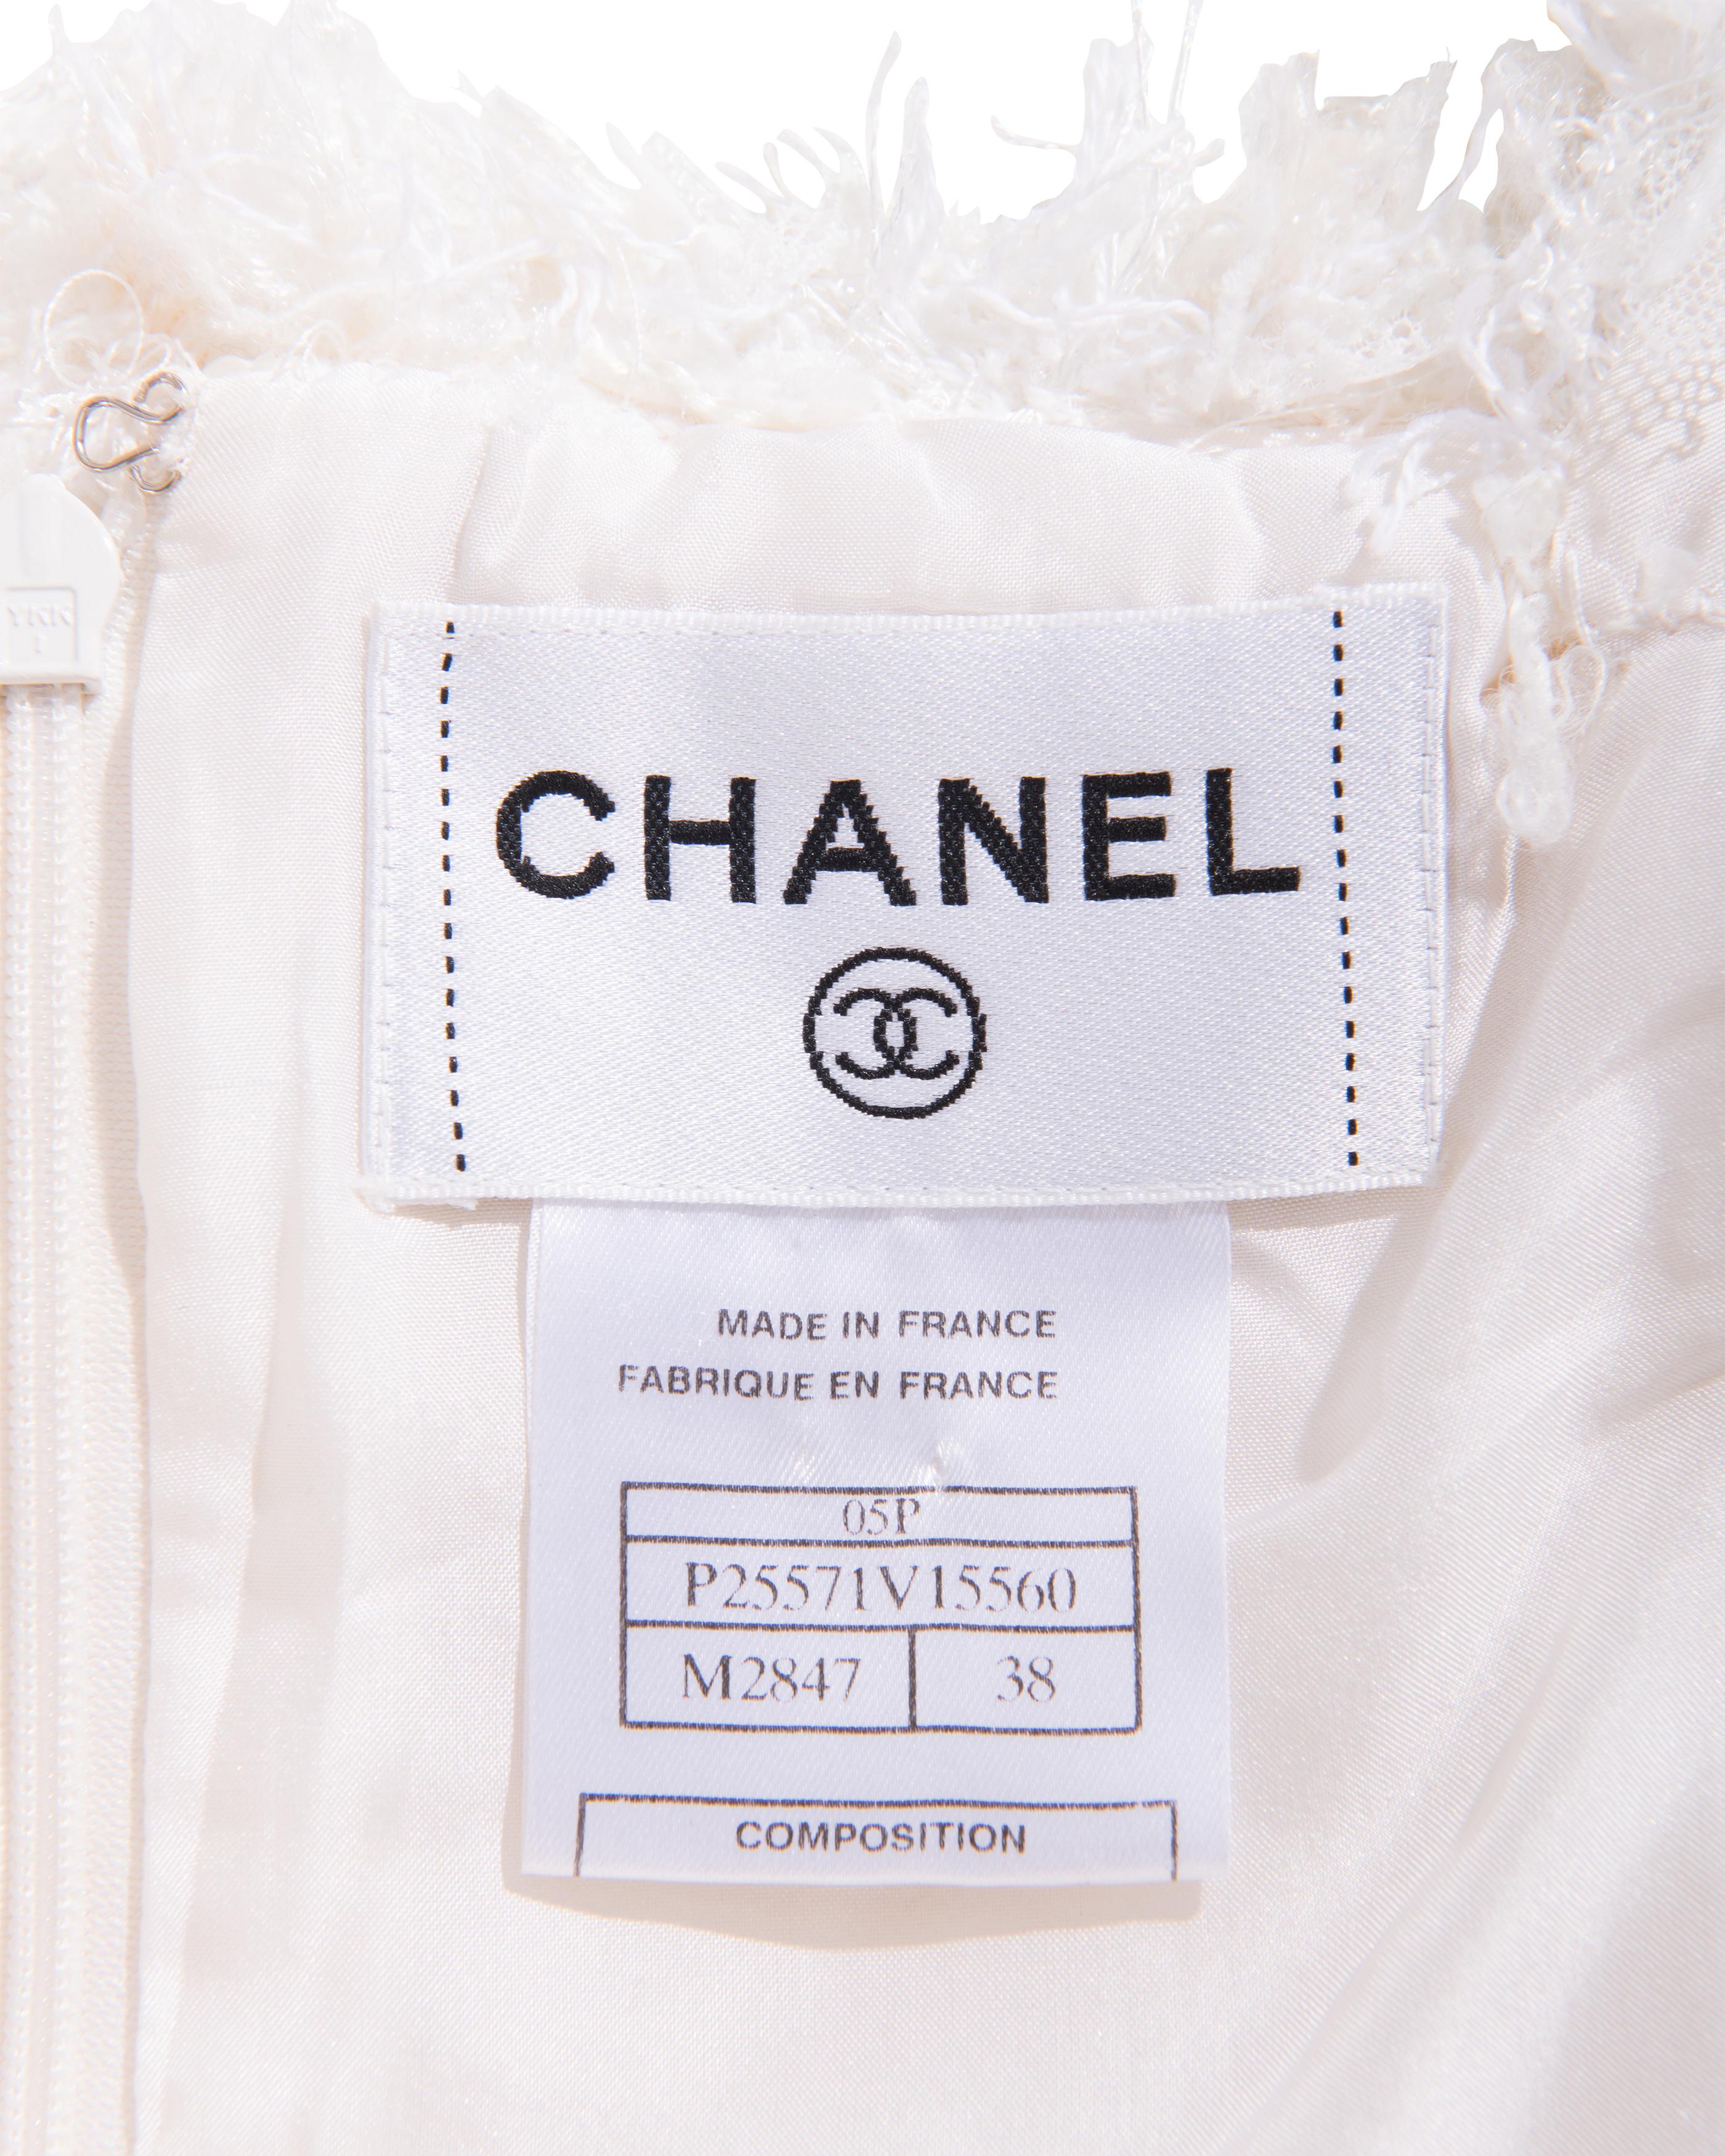 S/S 2005 Chanel by Karl Lagerfeld Metallic White Tweed Above-Knee Dress 5